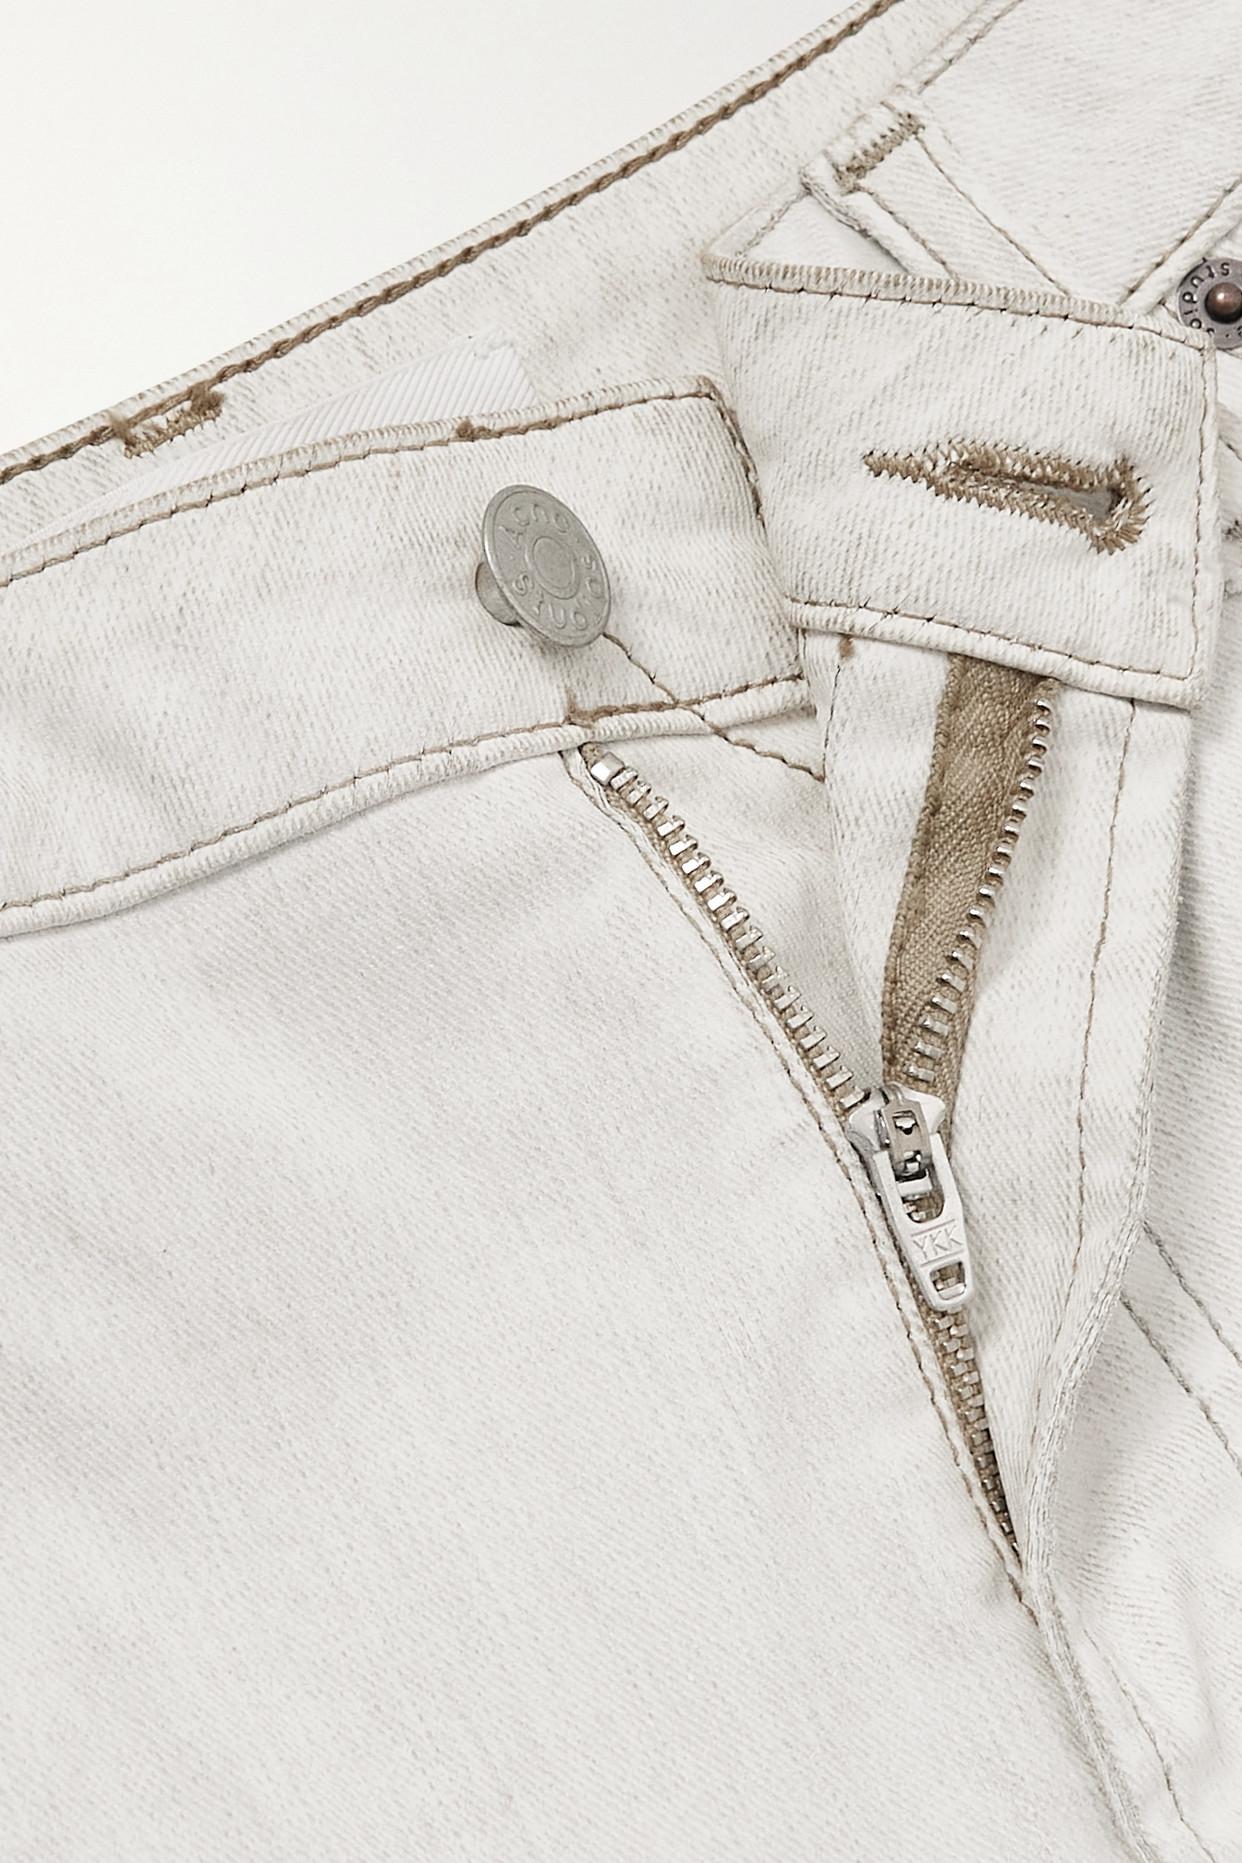 Kamel Abundantly Gnaven Acne Studios Bow-detailed Flared Jeans in White | Lyst